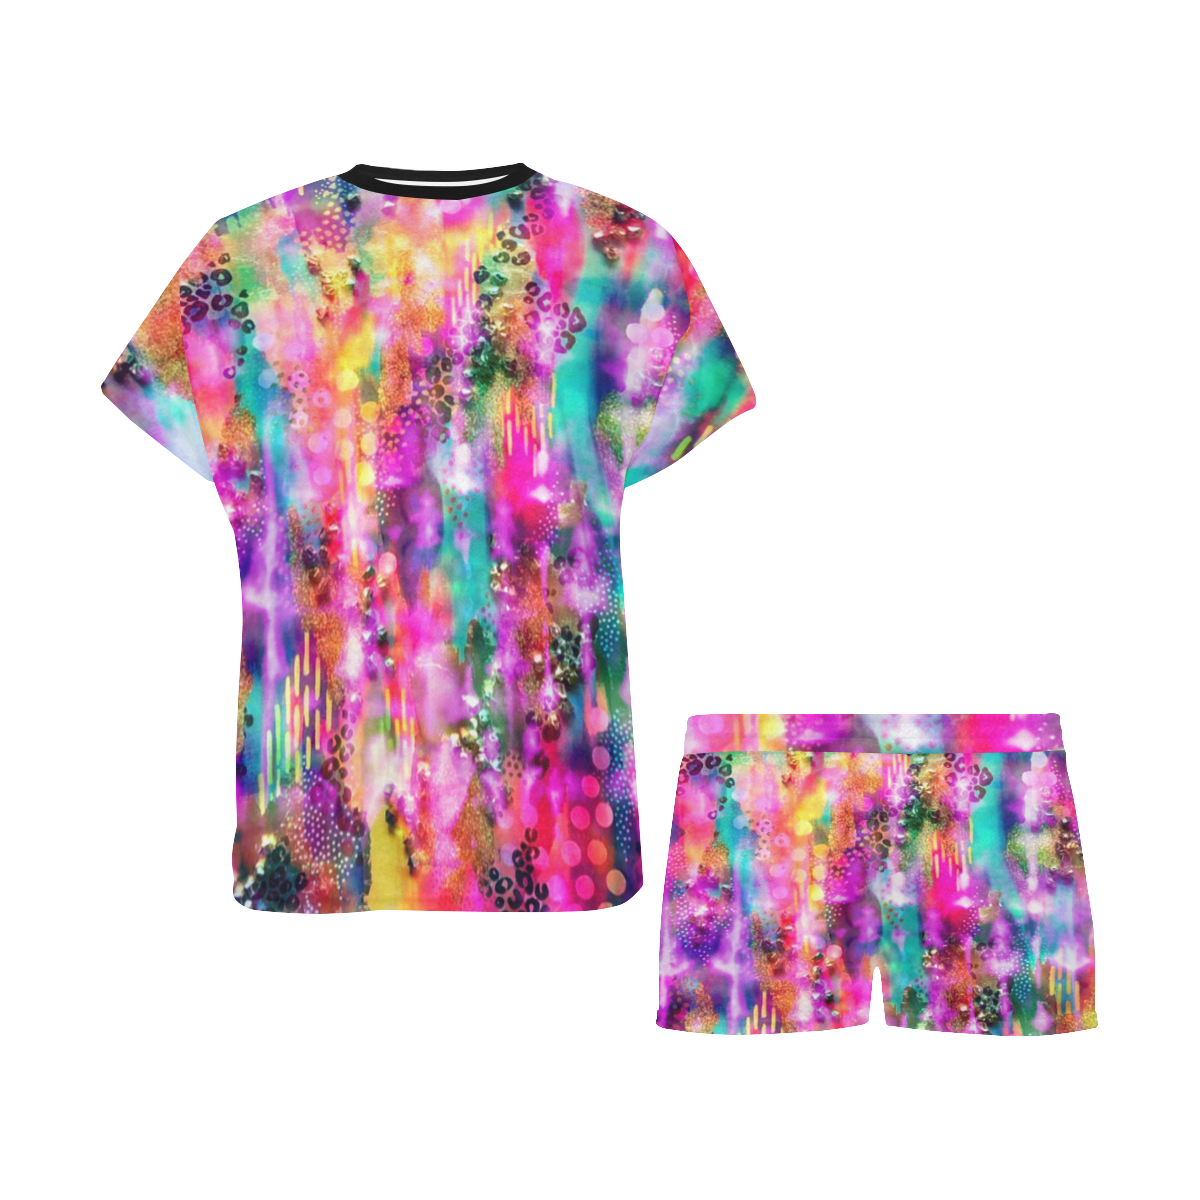 Rainbow Tie Dye Painting Mix Women's Short Pajama Set